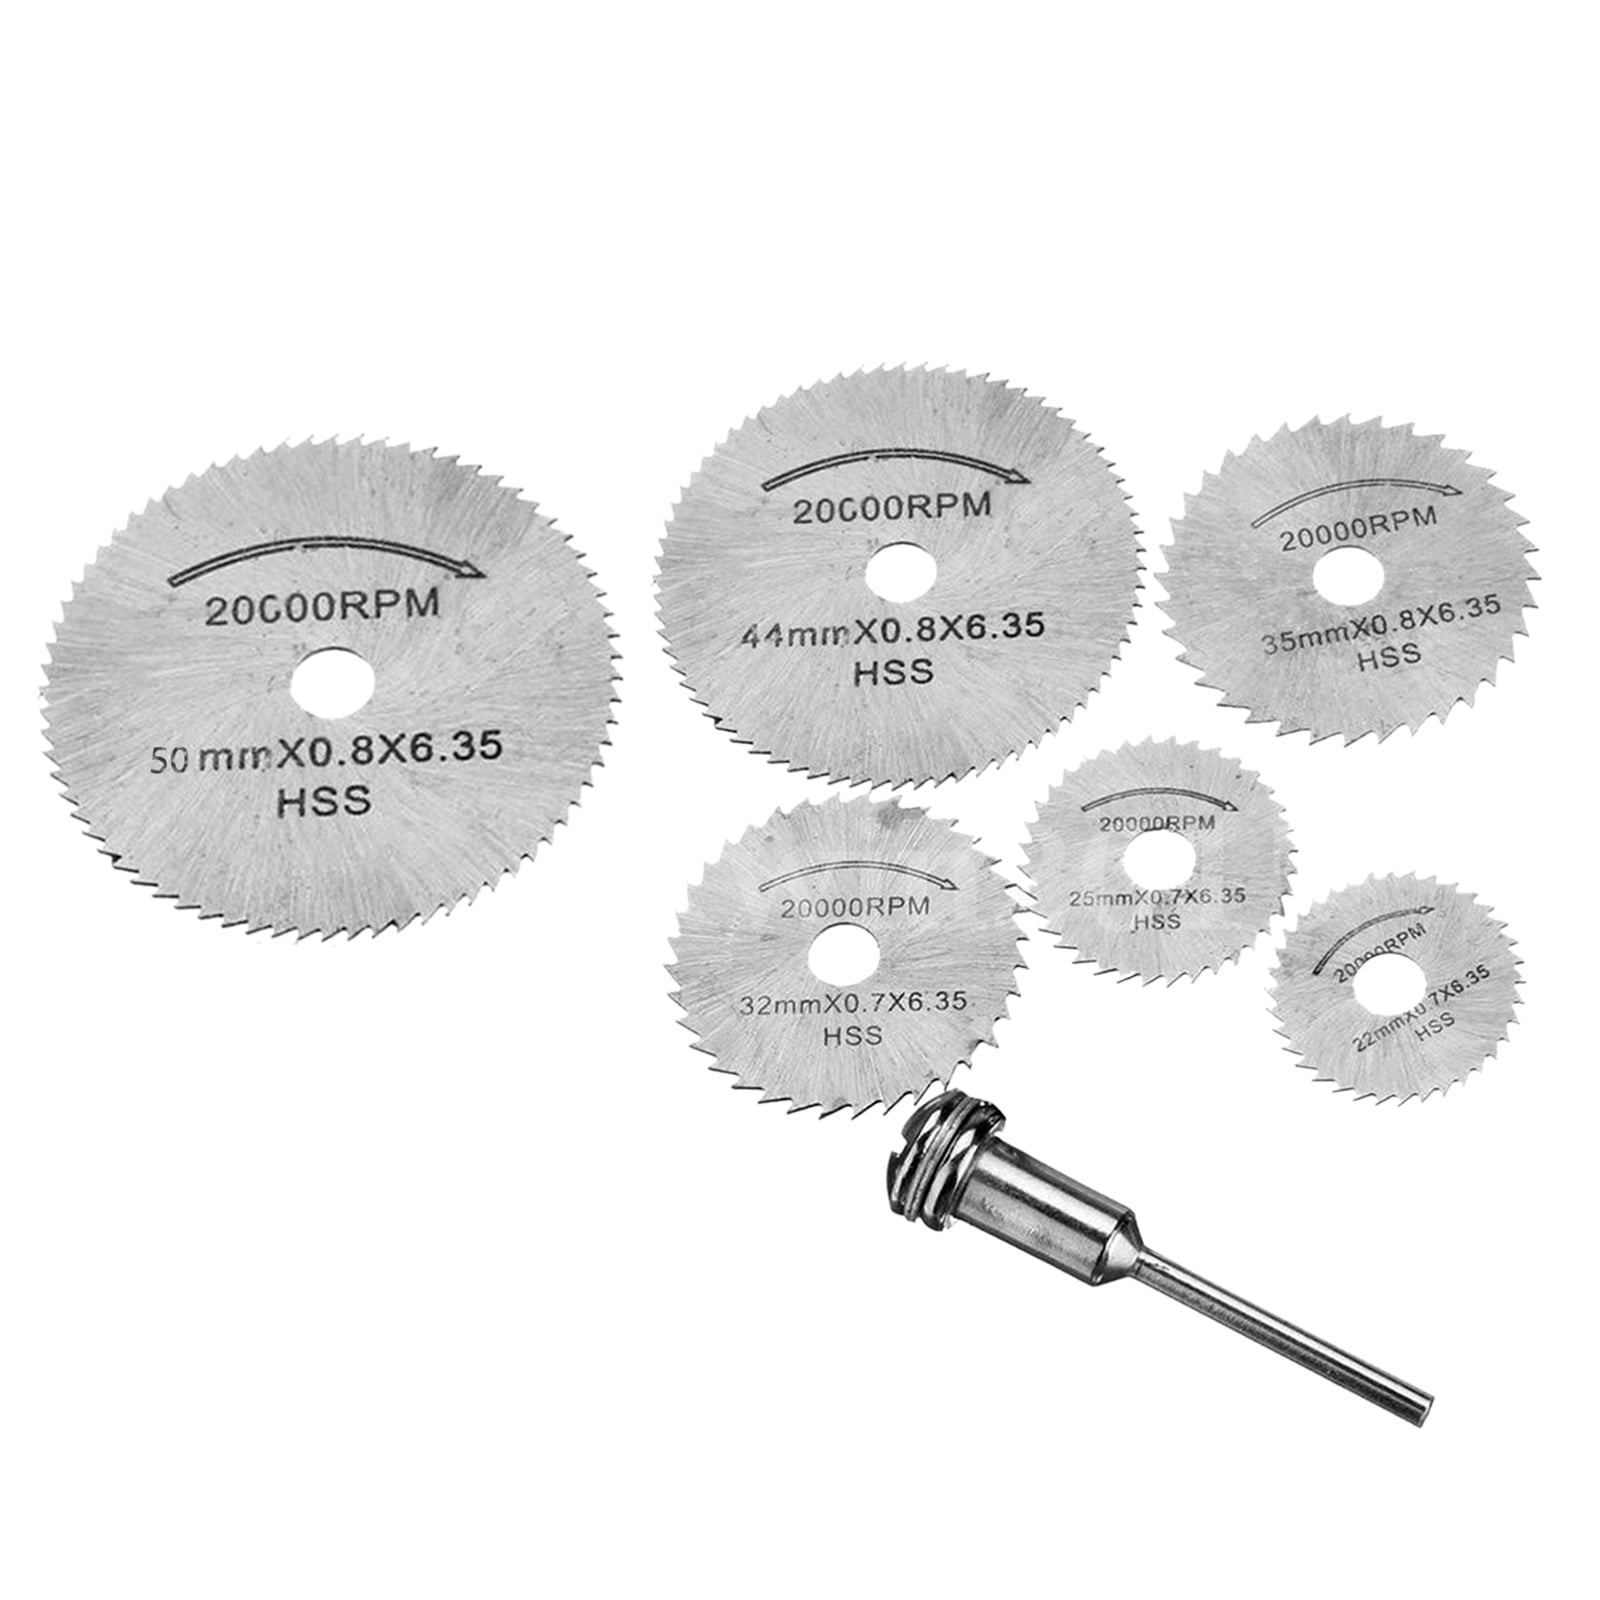 Dremel 4 inch Carbide Circular Saw Blade Wood Cutting Wheel Disc Rotary Tool New 